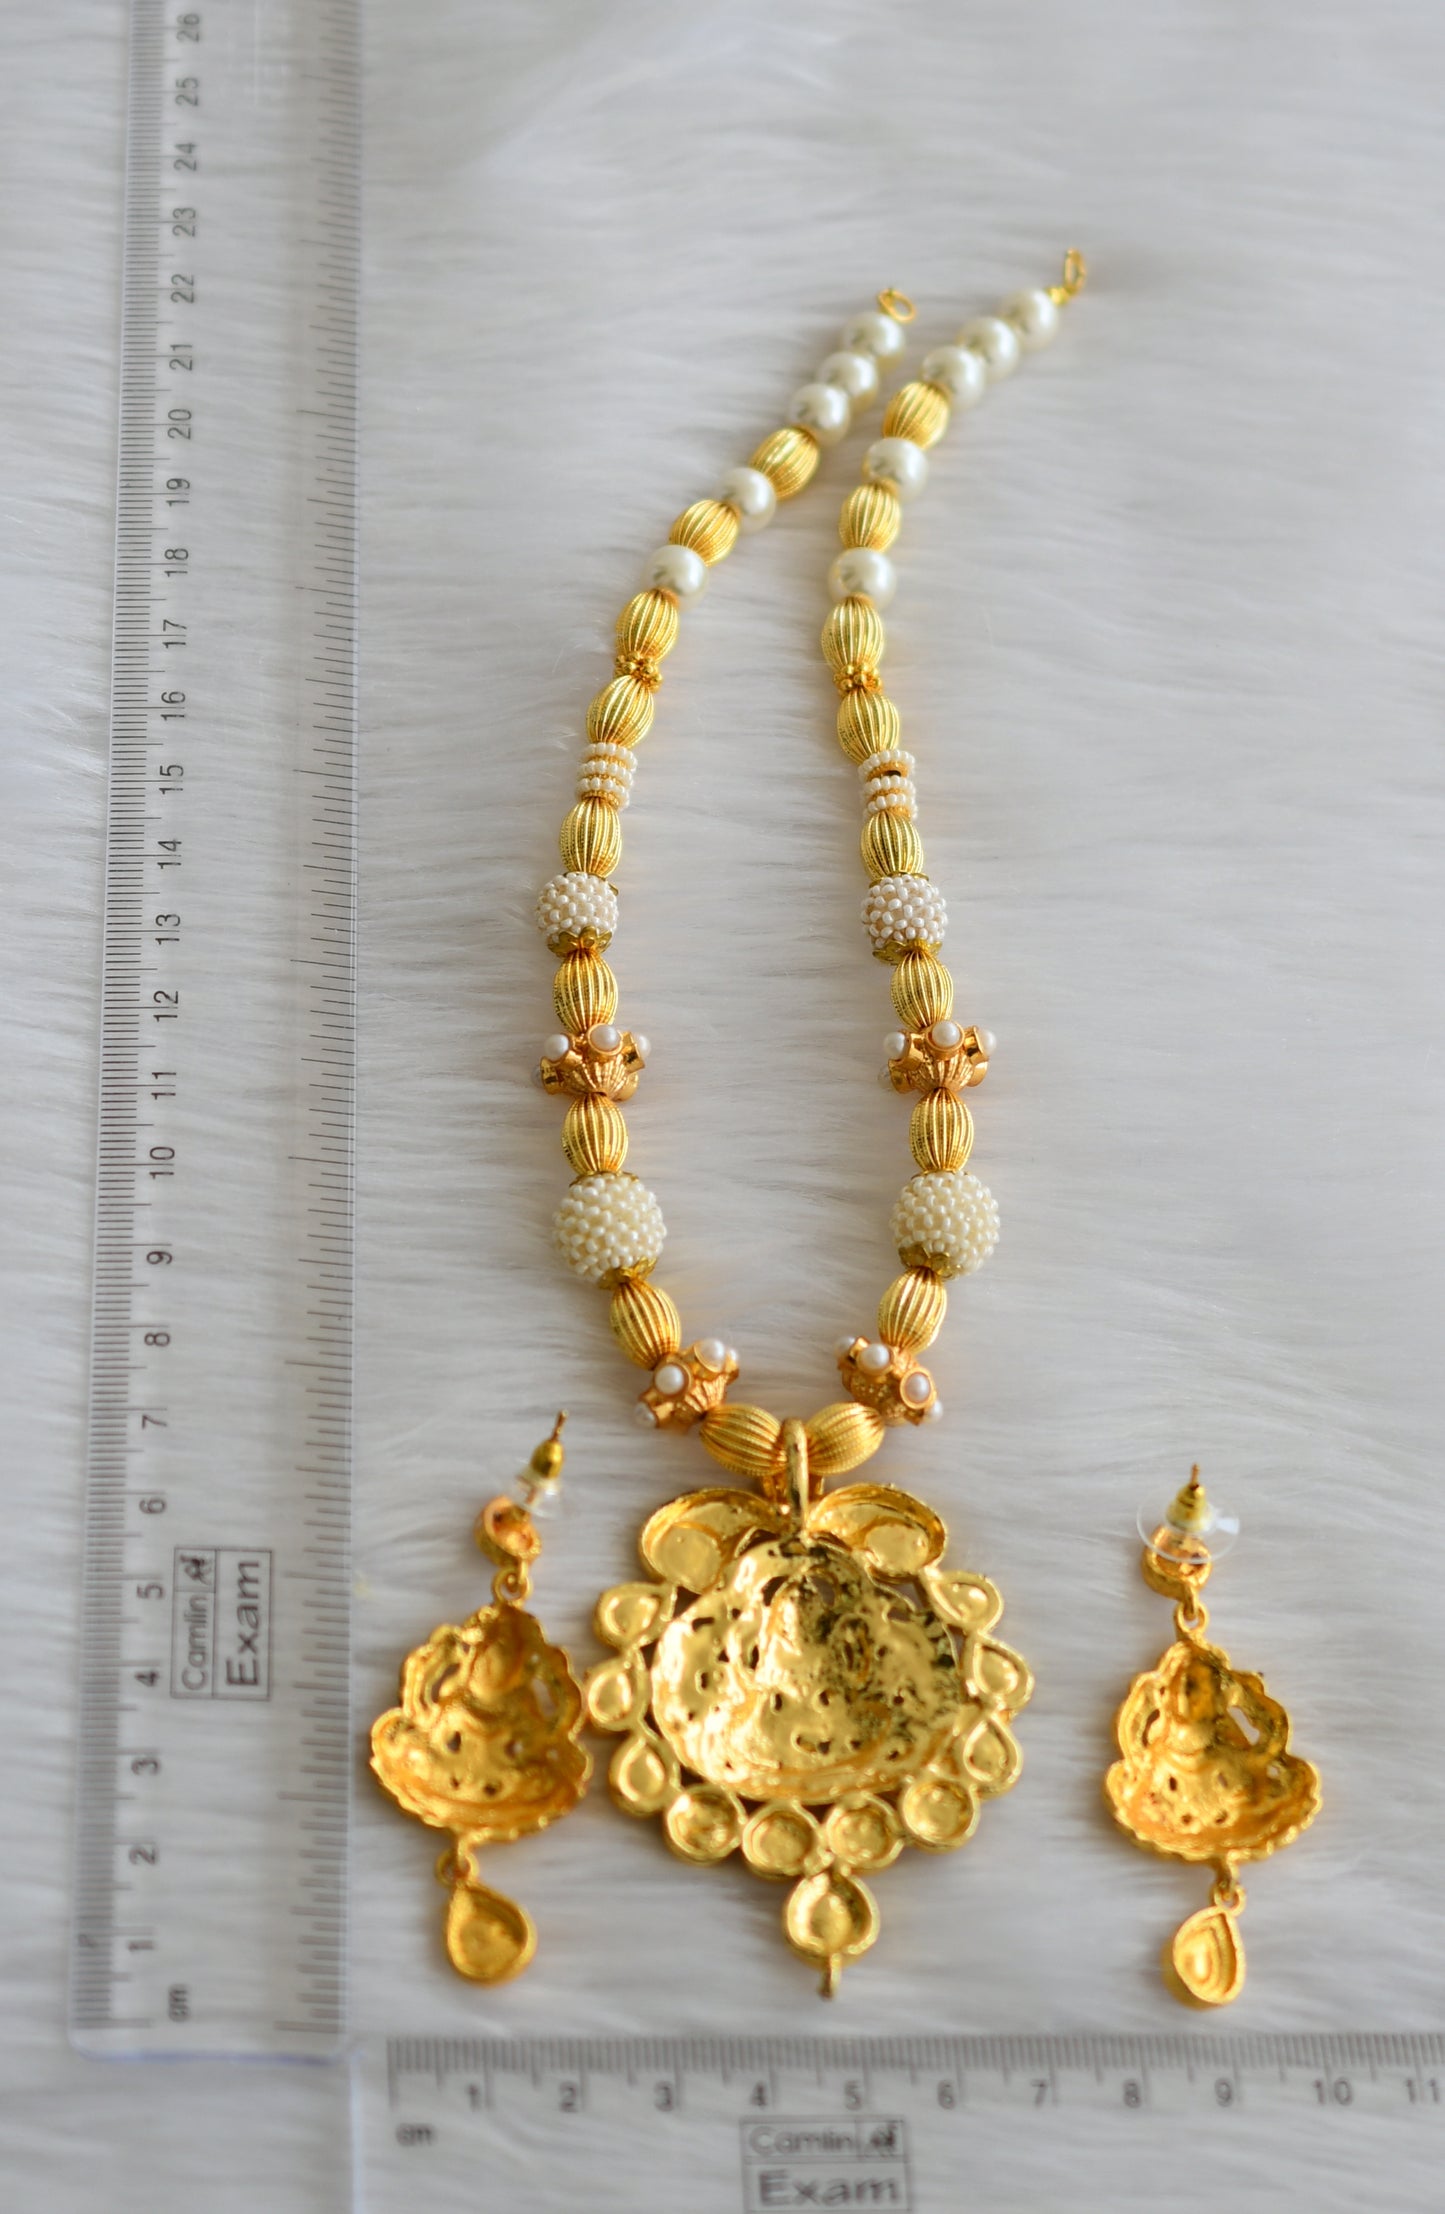 Gold tone pearl lakshmi necklace set dj-03701